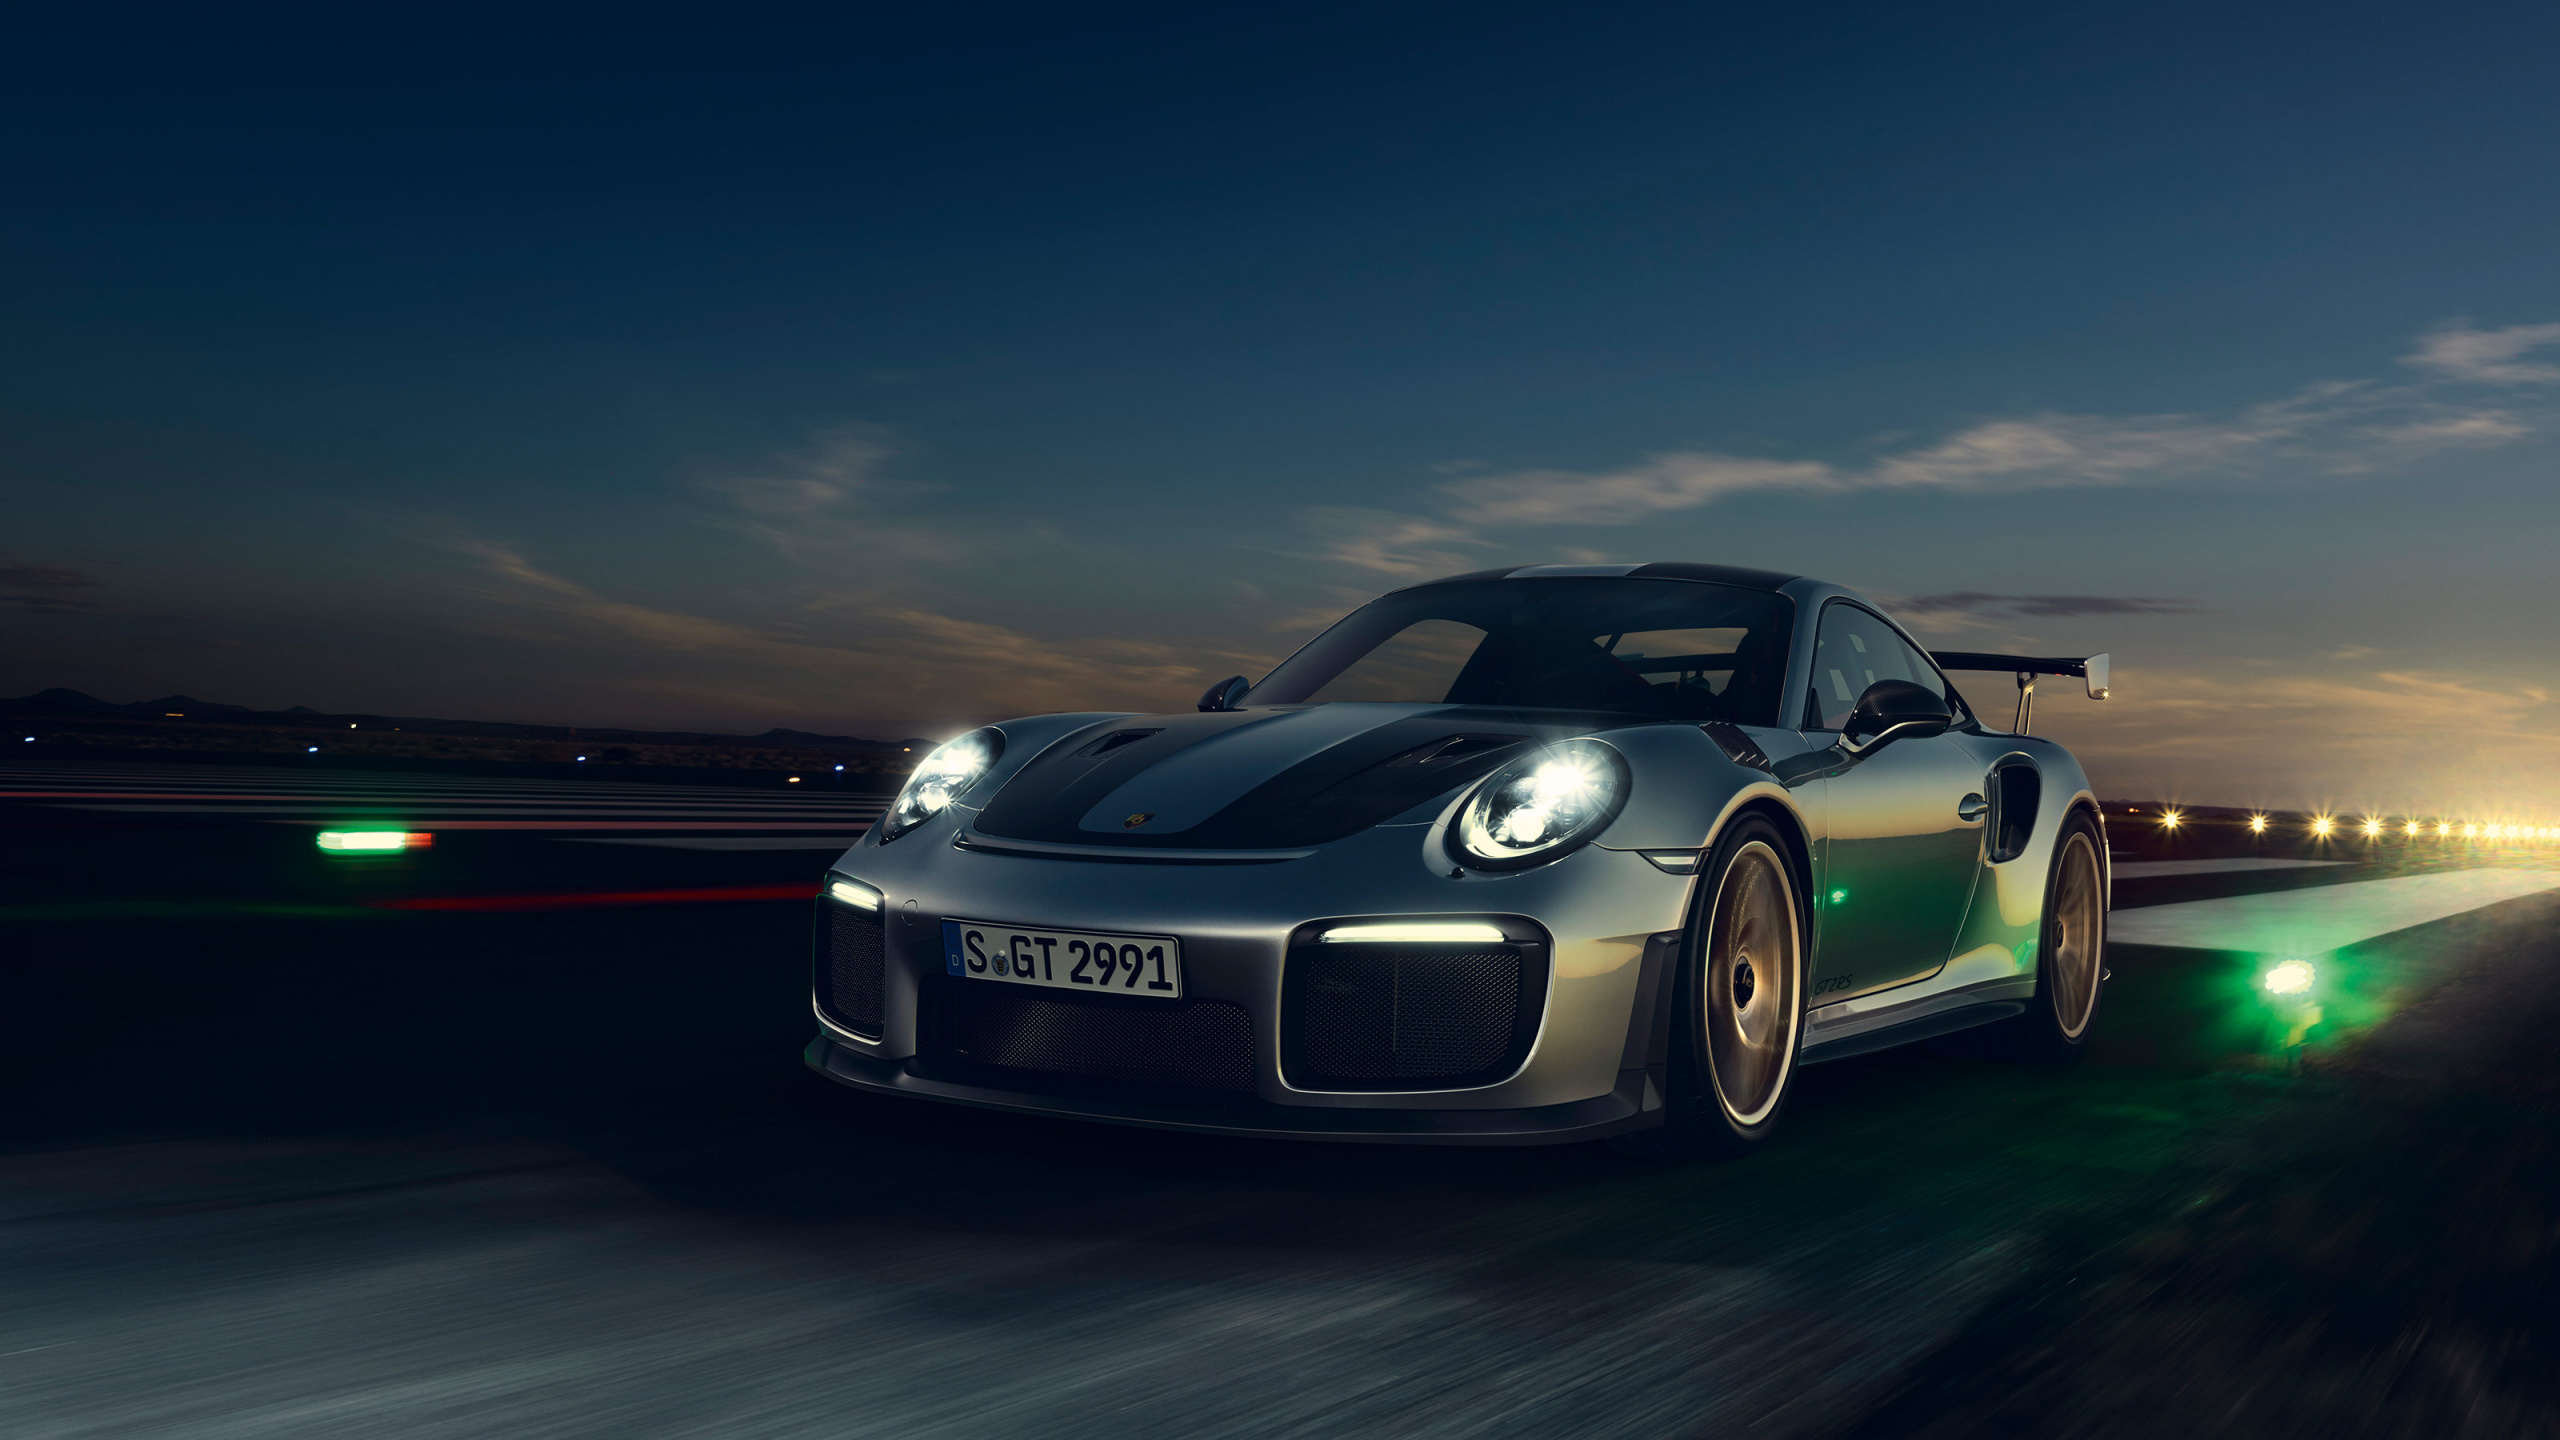 Porsche 911 Negro en la Carretera Durante la Noche. Wallpaper in 2560x1440 Resolution